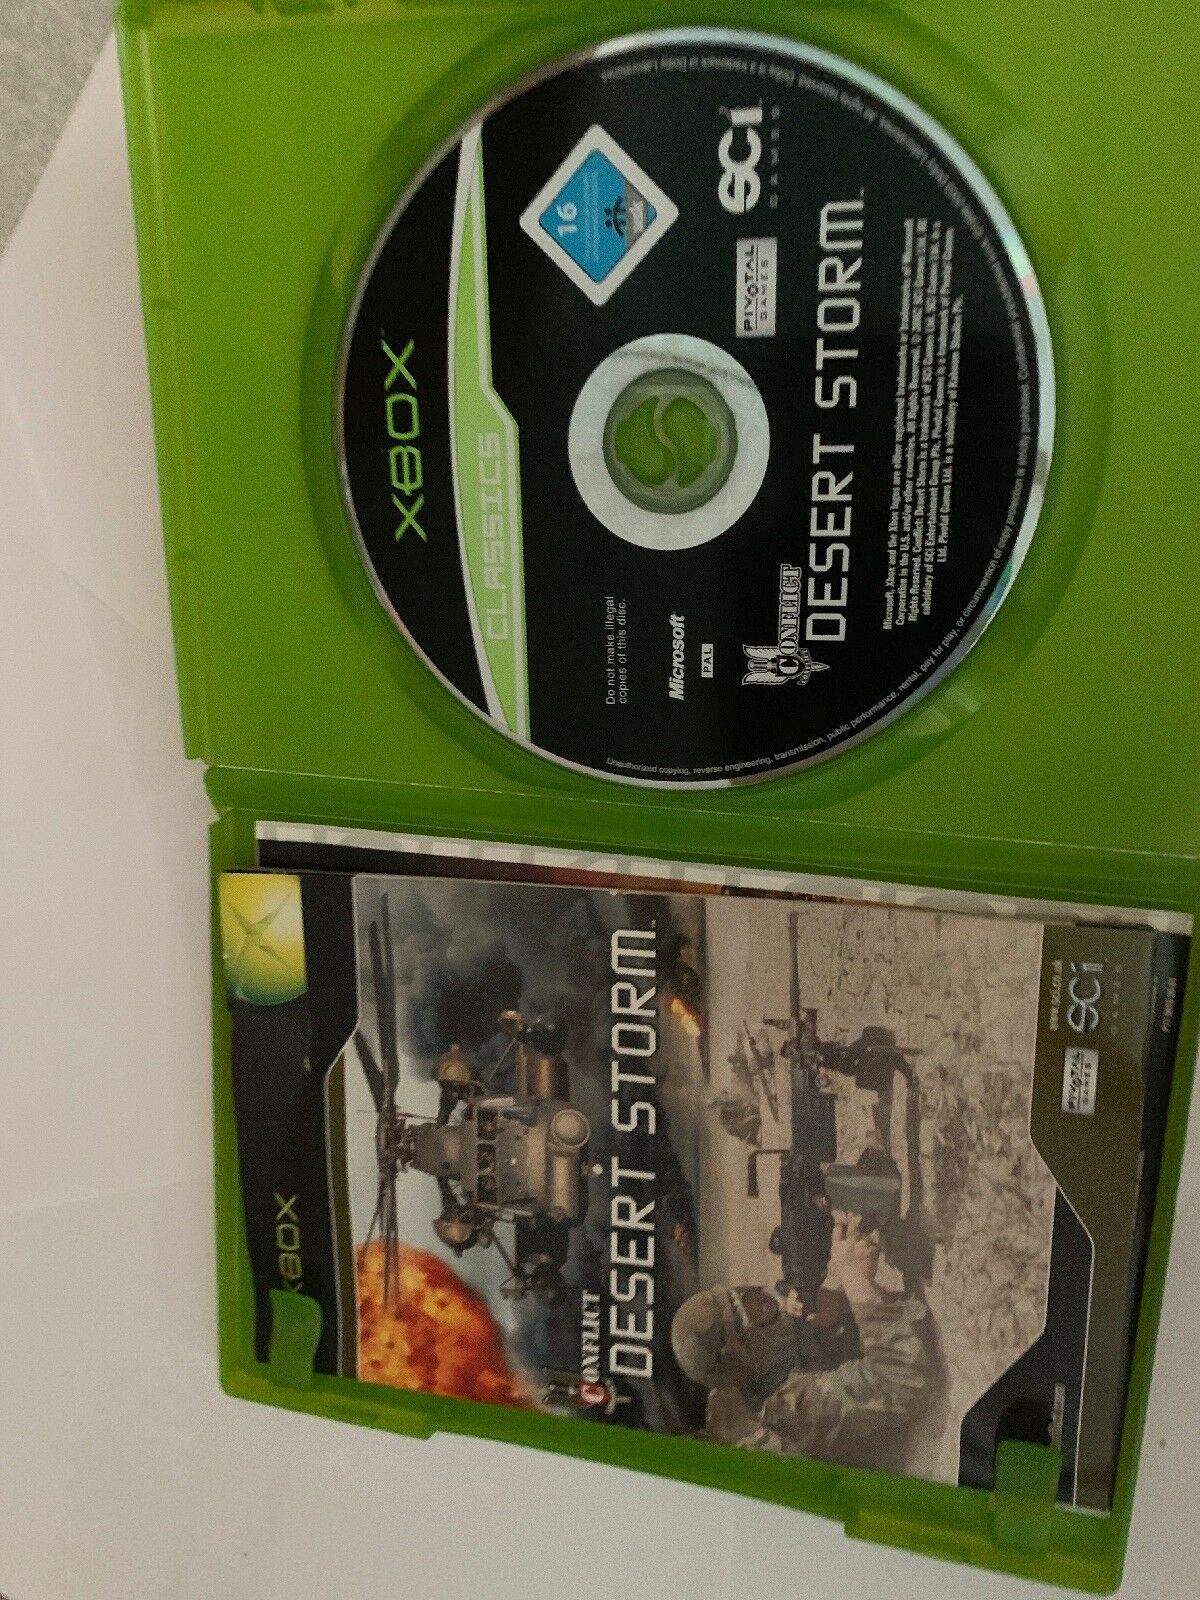 Conflict Desert Storm - Microsoft Xbox Original PAL Game